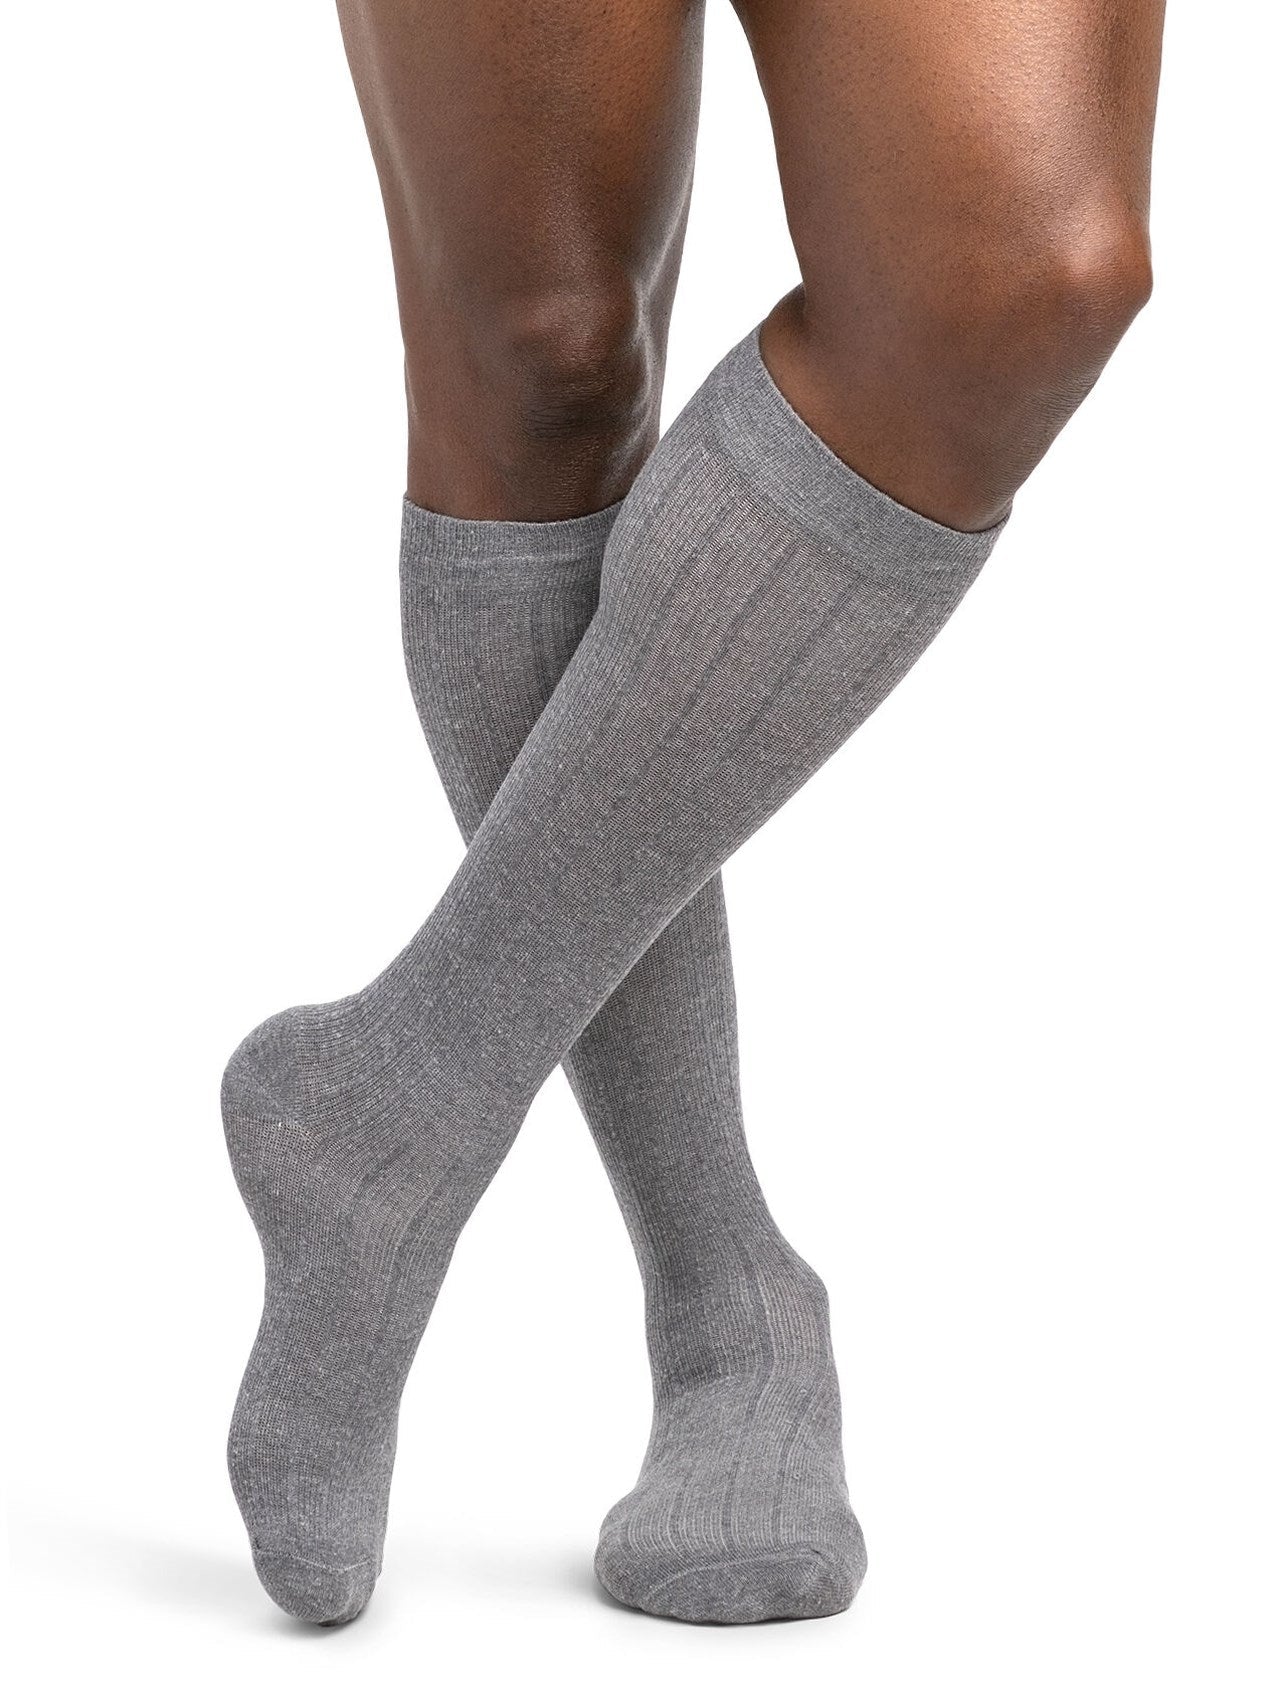 Sigvaris 190 Linen Compression Socks 15-20 mmHg Calf High For Men Closed Toe